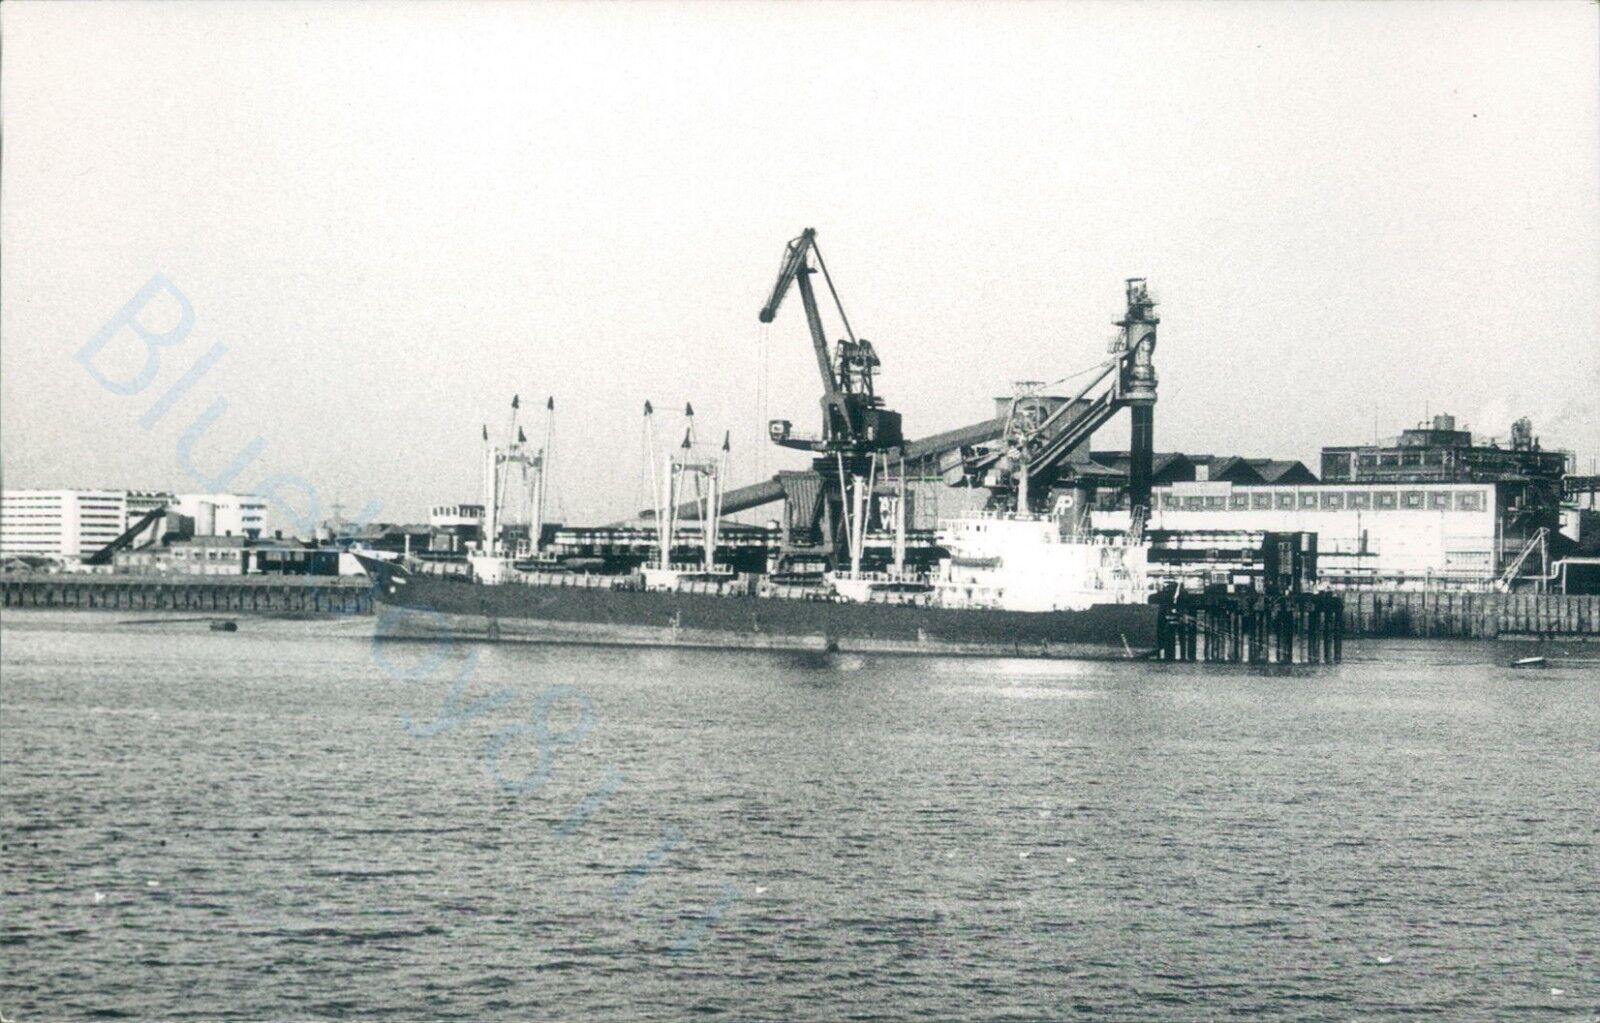 Cyprus MV Pericles at silvertown 1992 ship photo docked